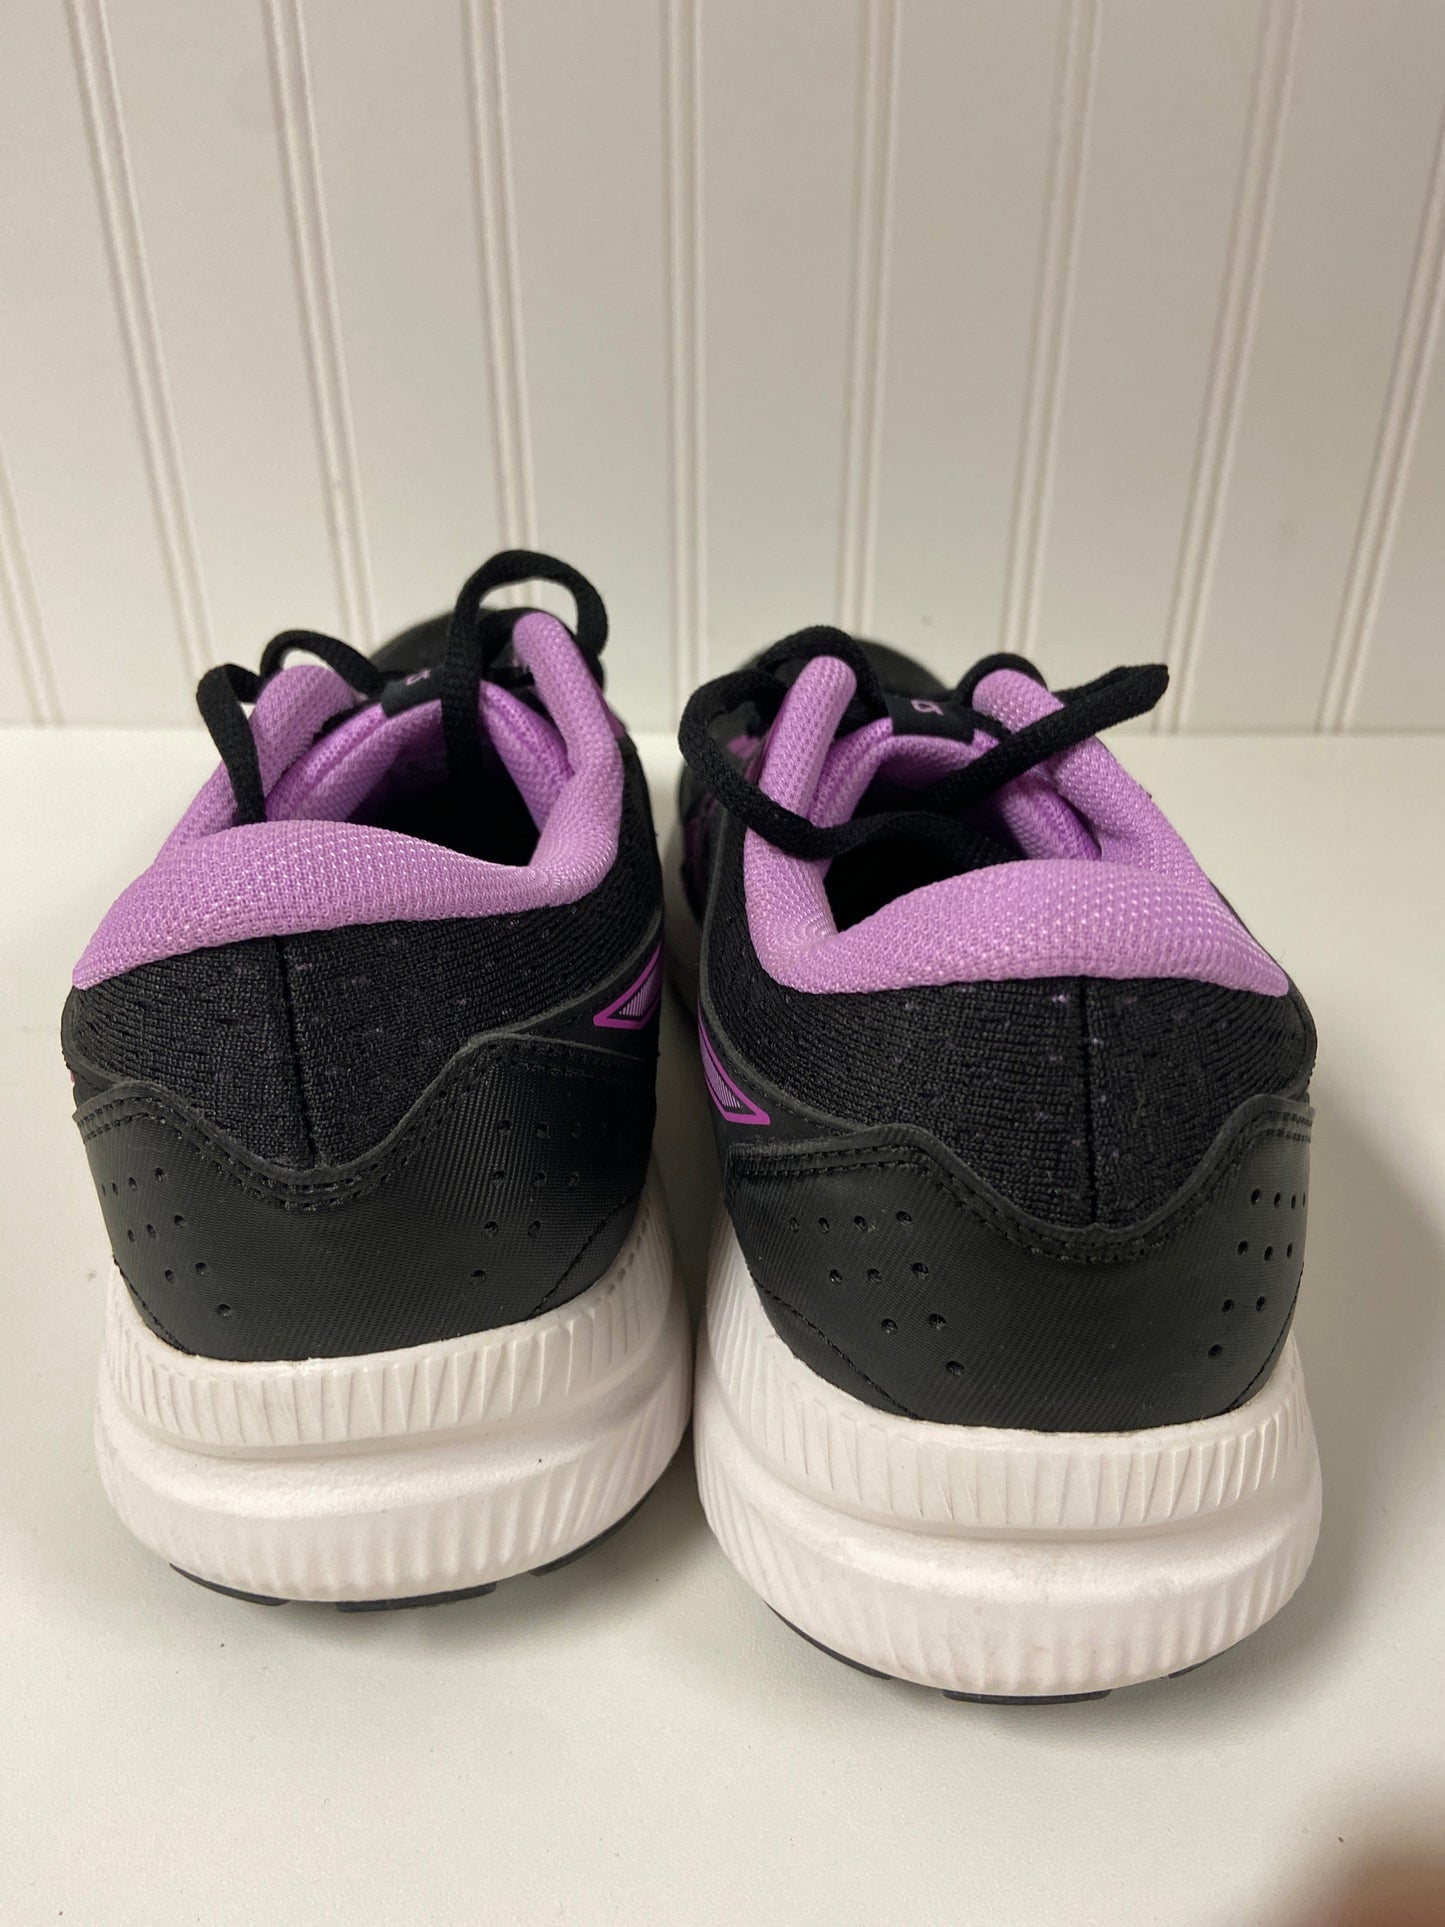 Black & Purple Shoes Athletic Asics, Size 8